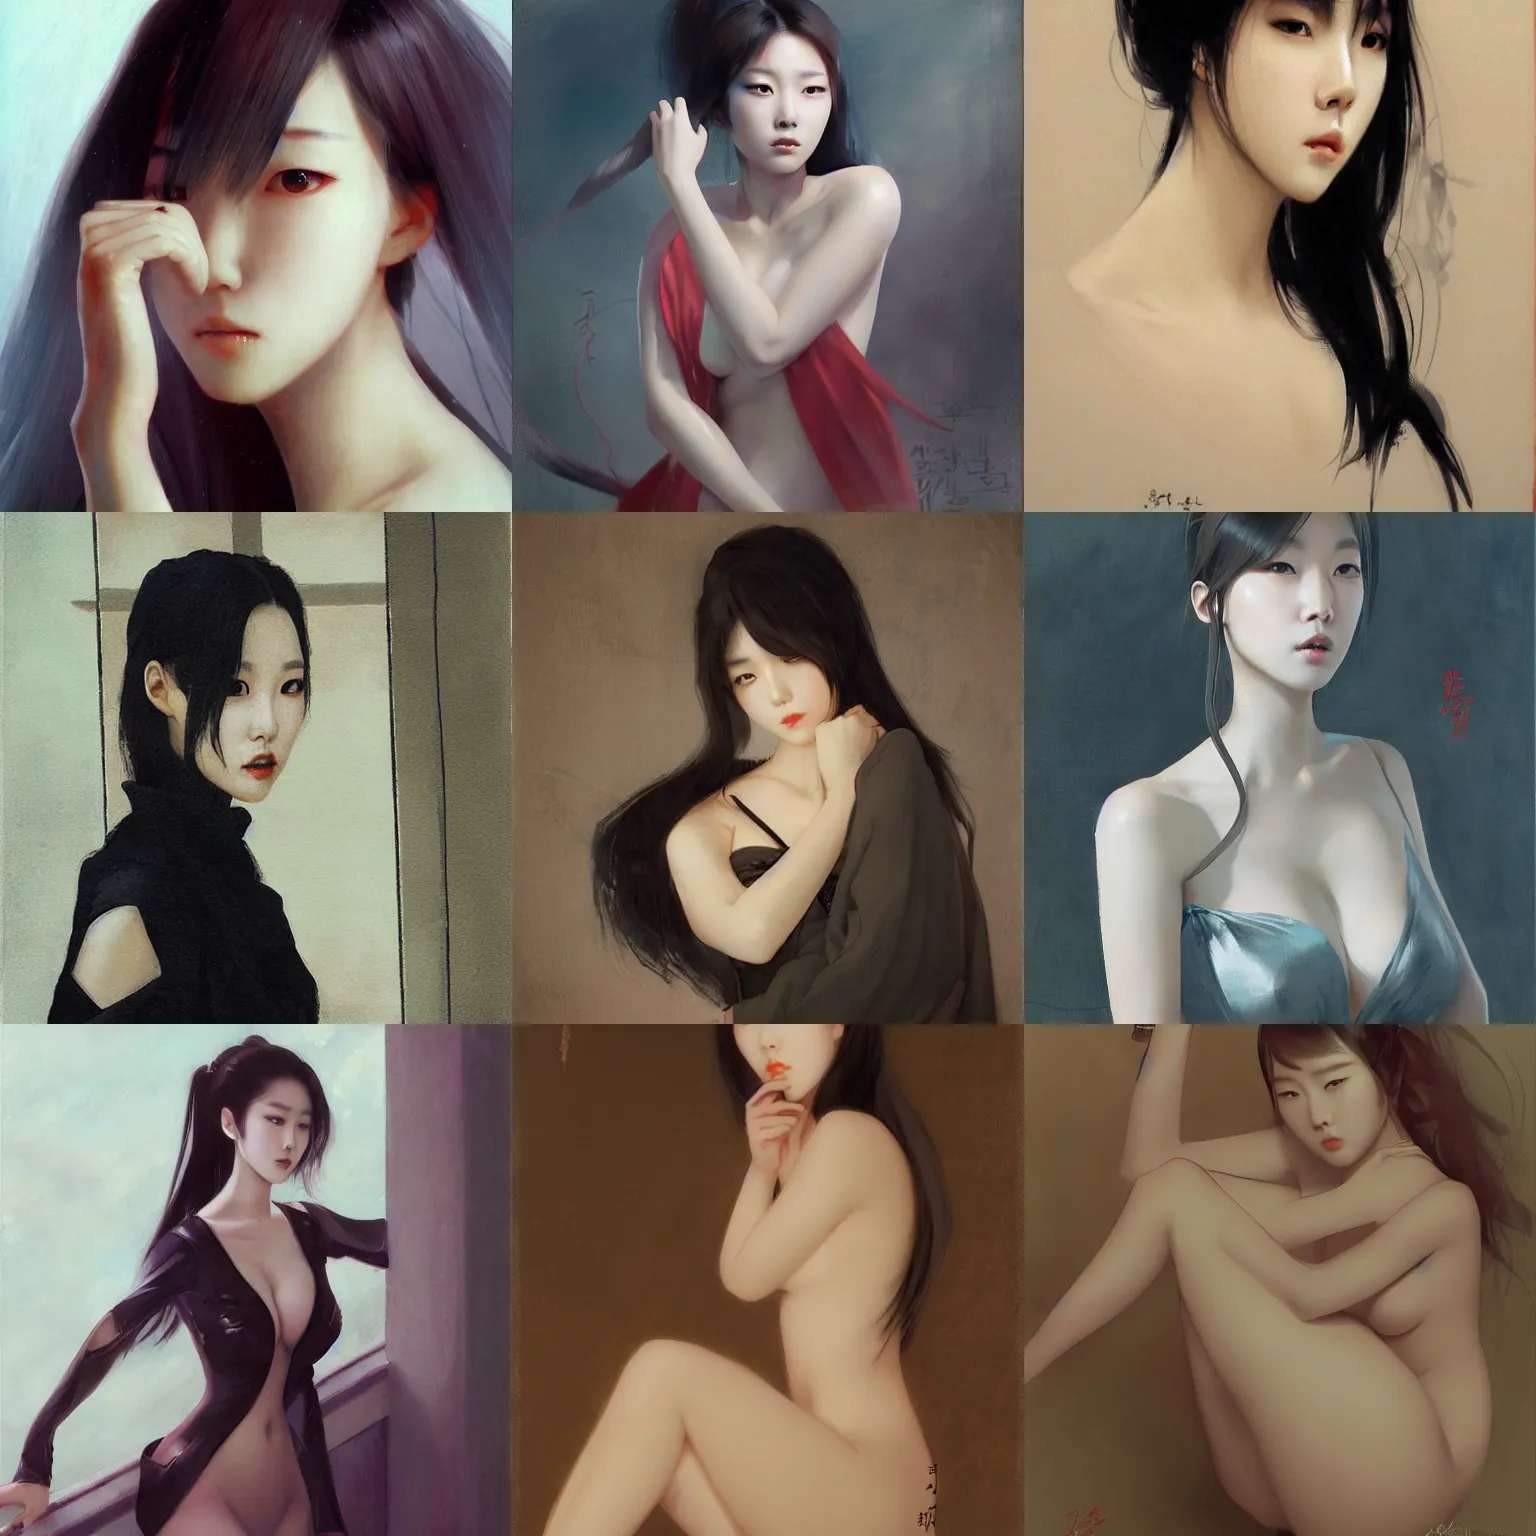 Prompt: lee jin - eun by bayard wu, rule of thirds, seductive look, beautiful